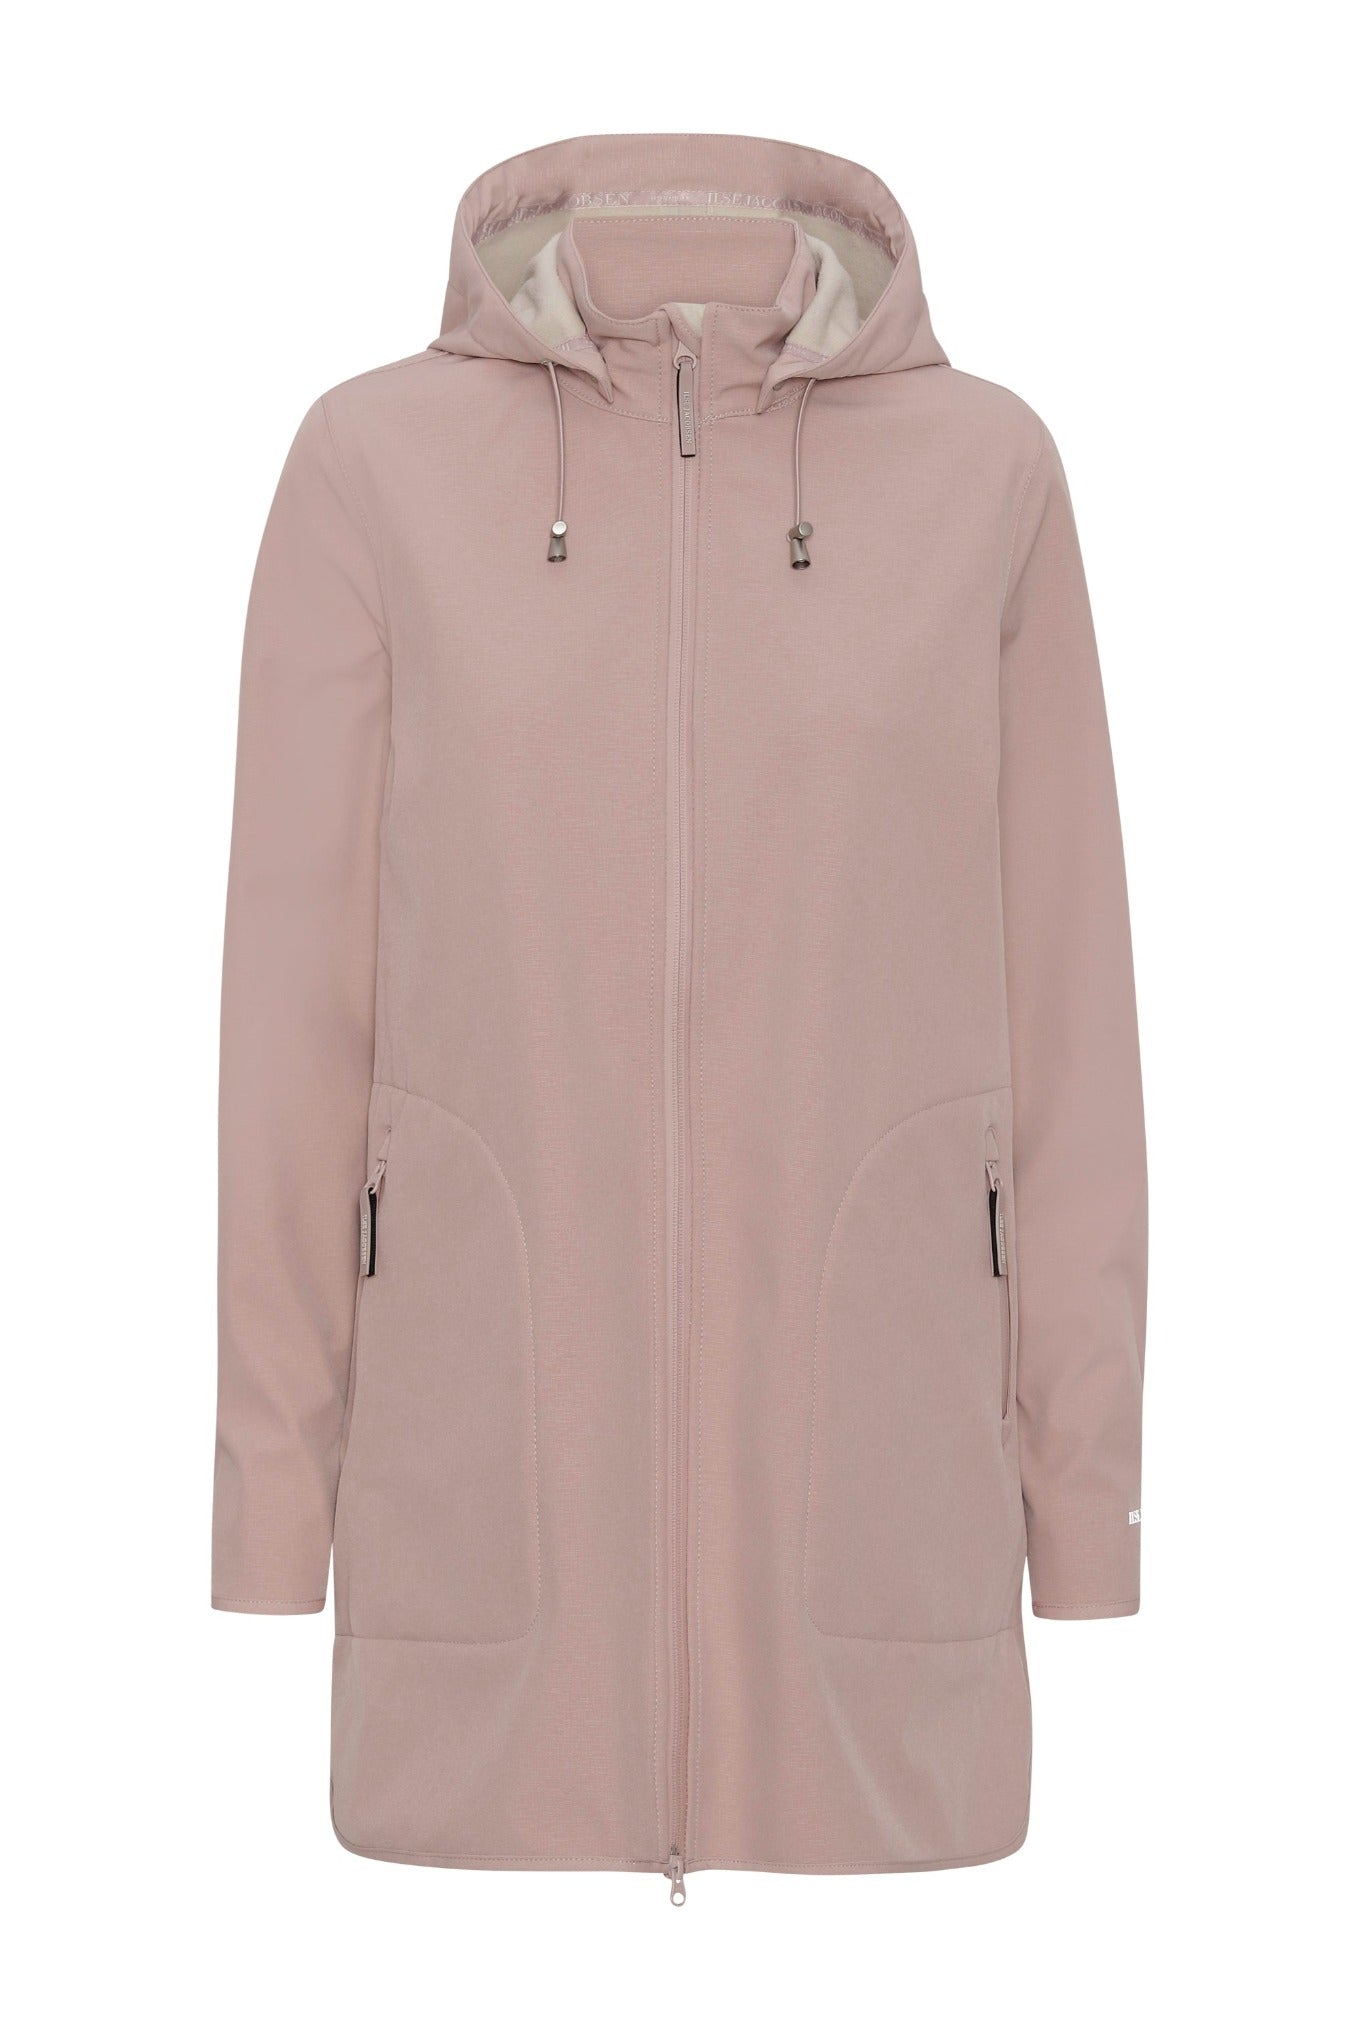 Ilse Jacobsen Rain135B waterproof lined jacket in Adobe rose pink.